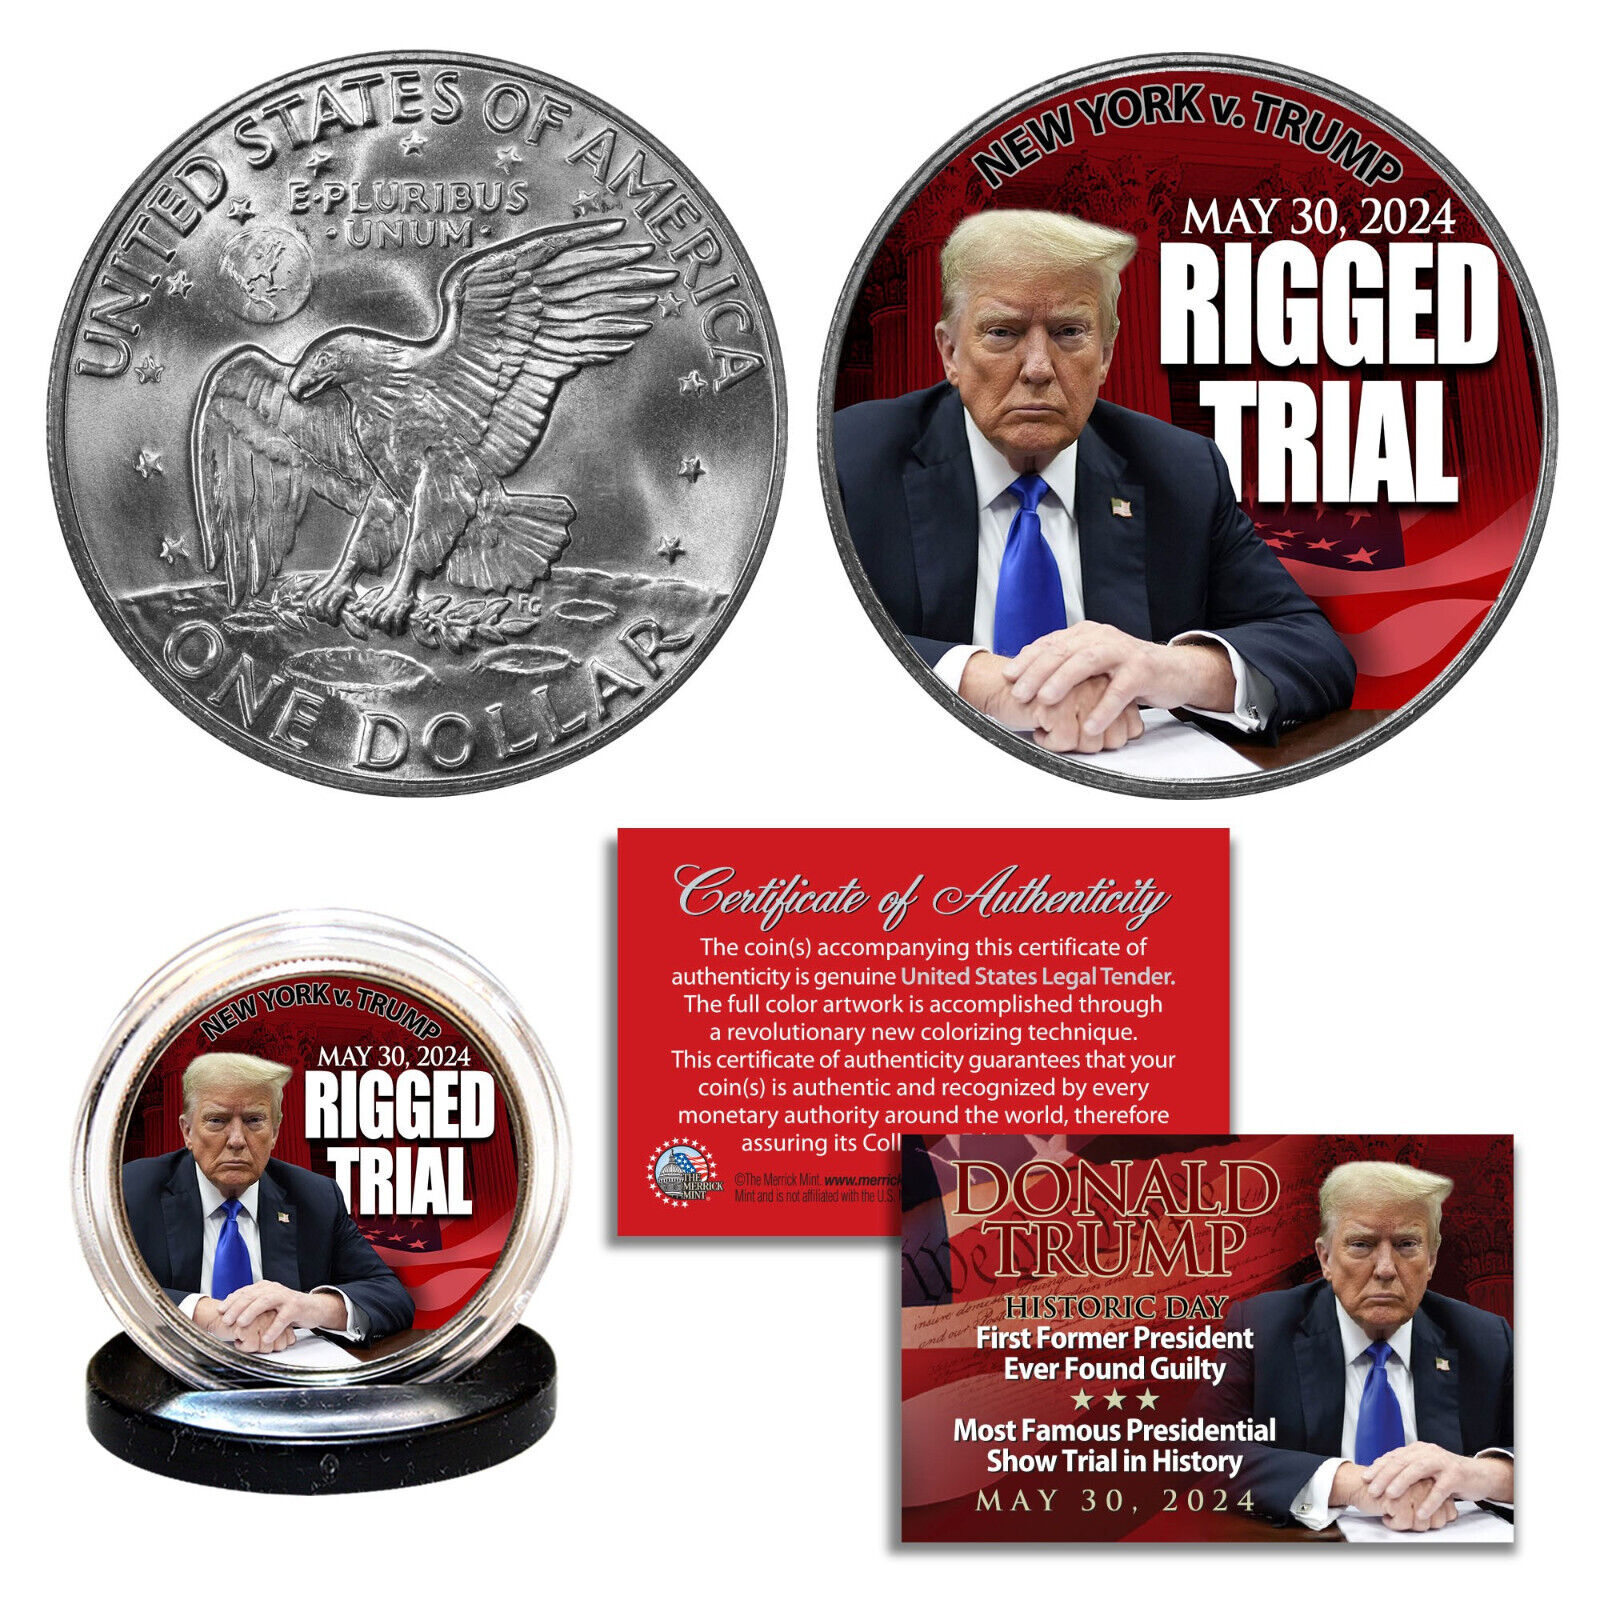 DONALD TRUMP Historic NY vs. TRUMP Trial Official Legal Tender IKE $1 U.S. Coin